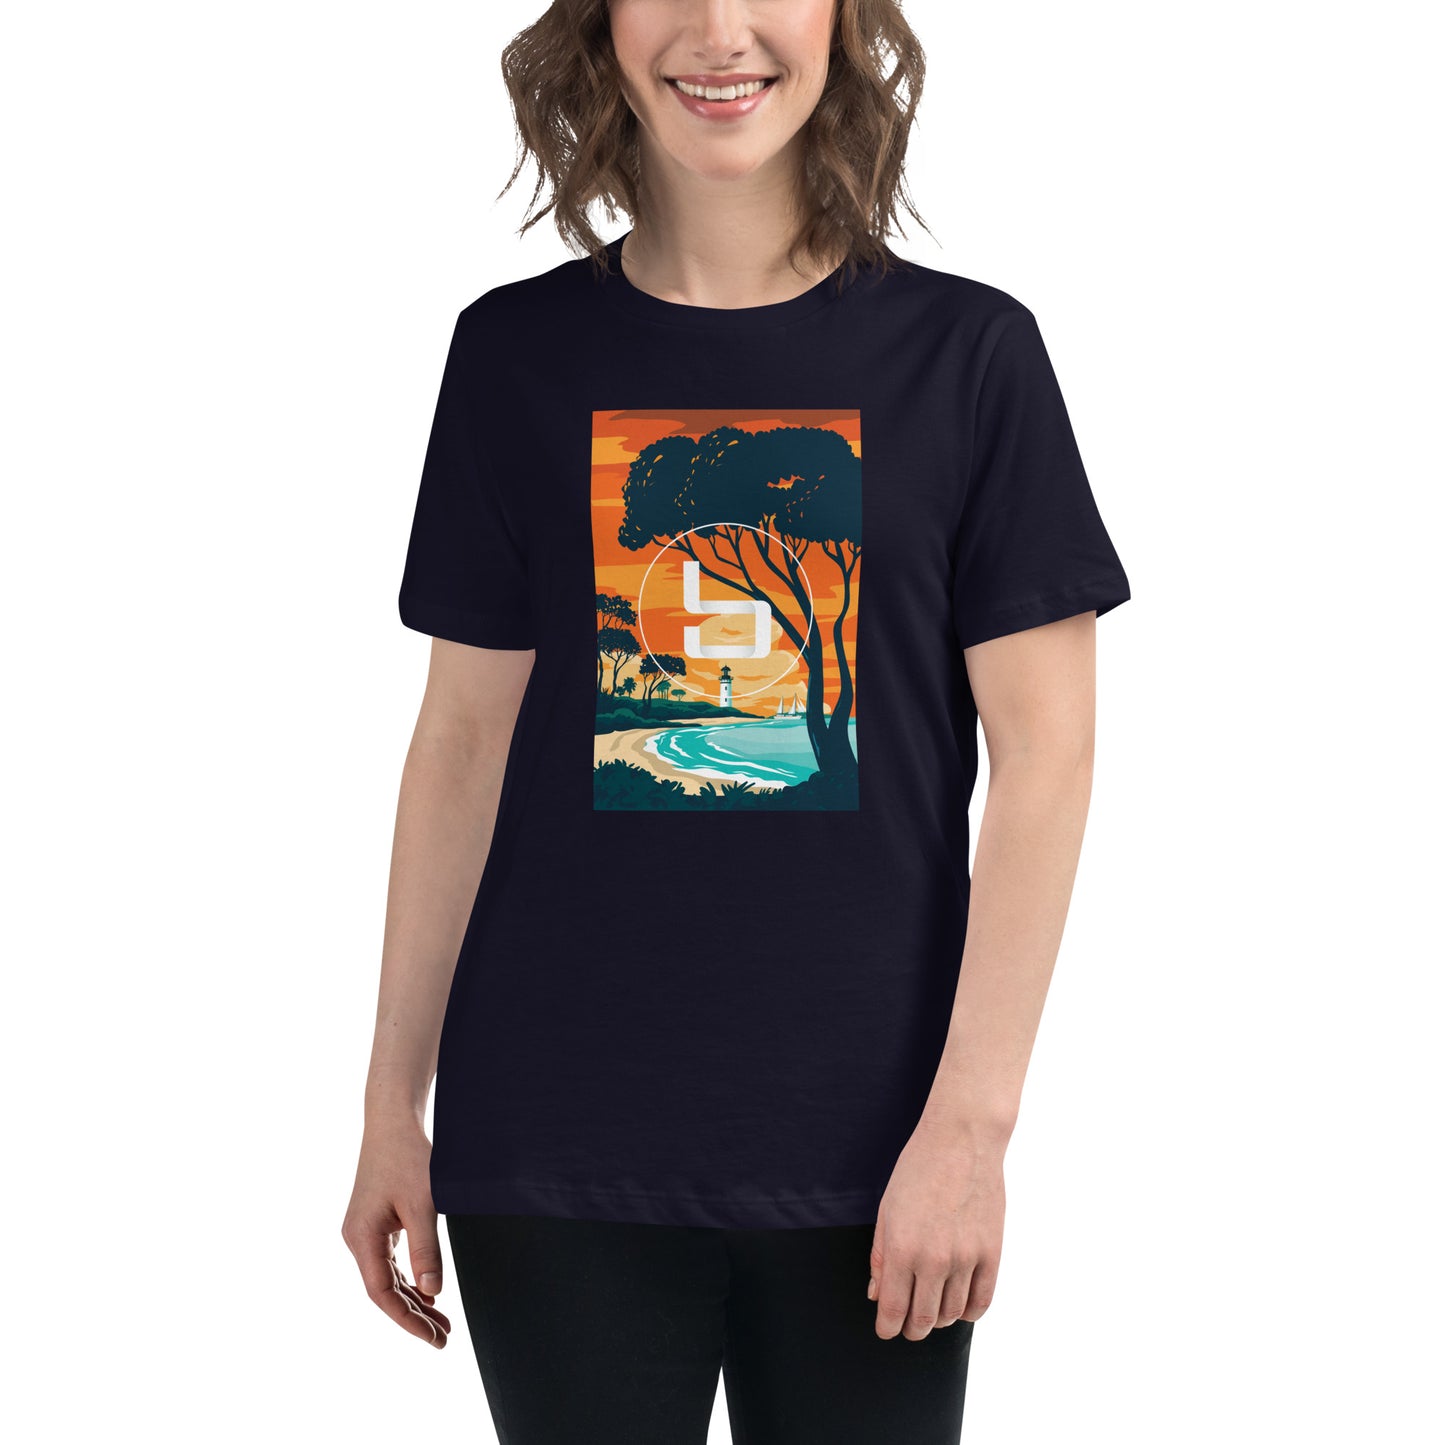 Amelia Island Women's Relaxed Landscape T-Shirt